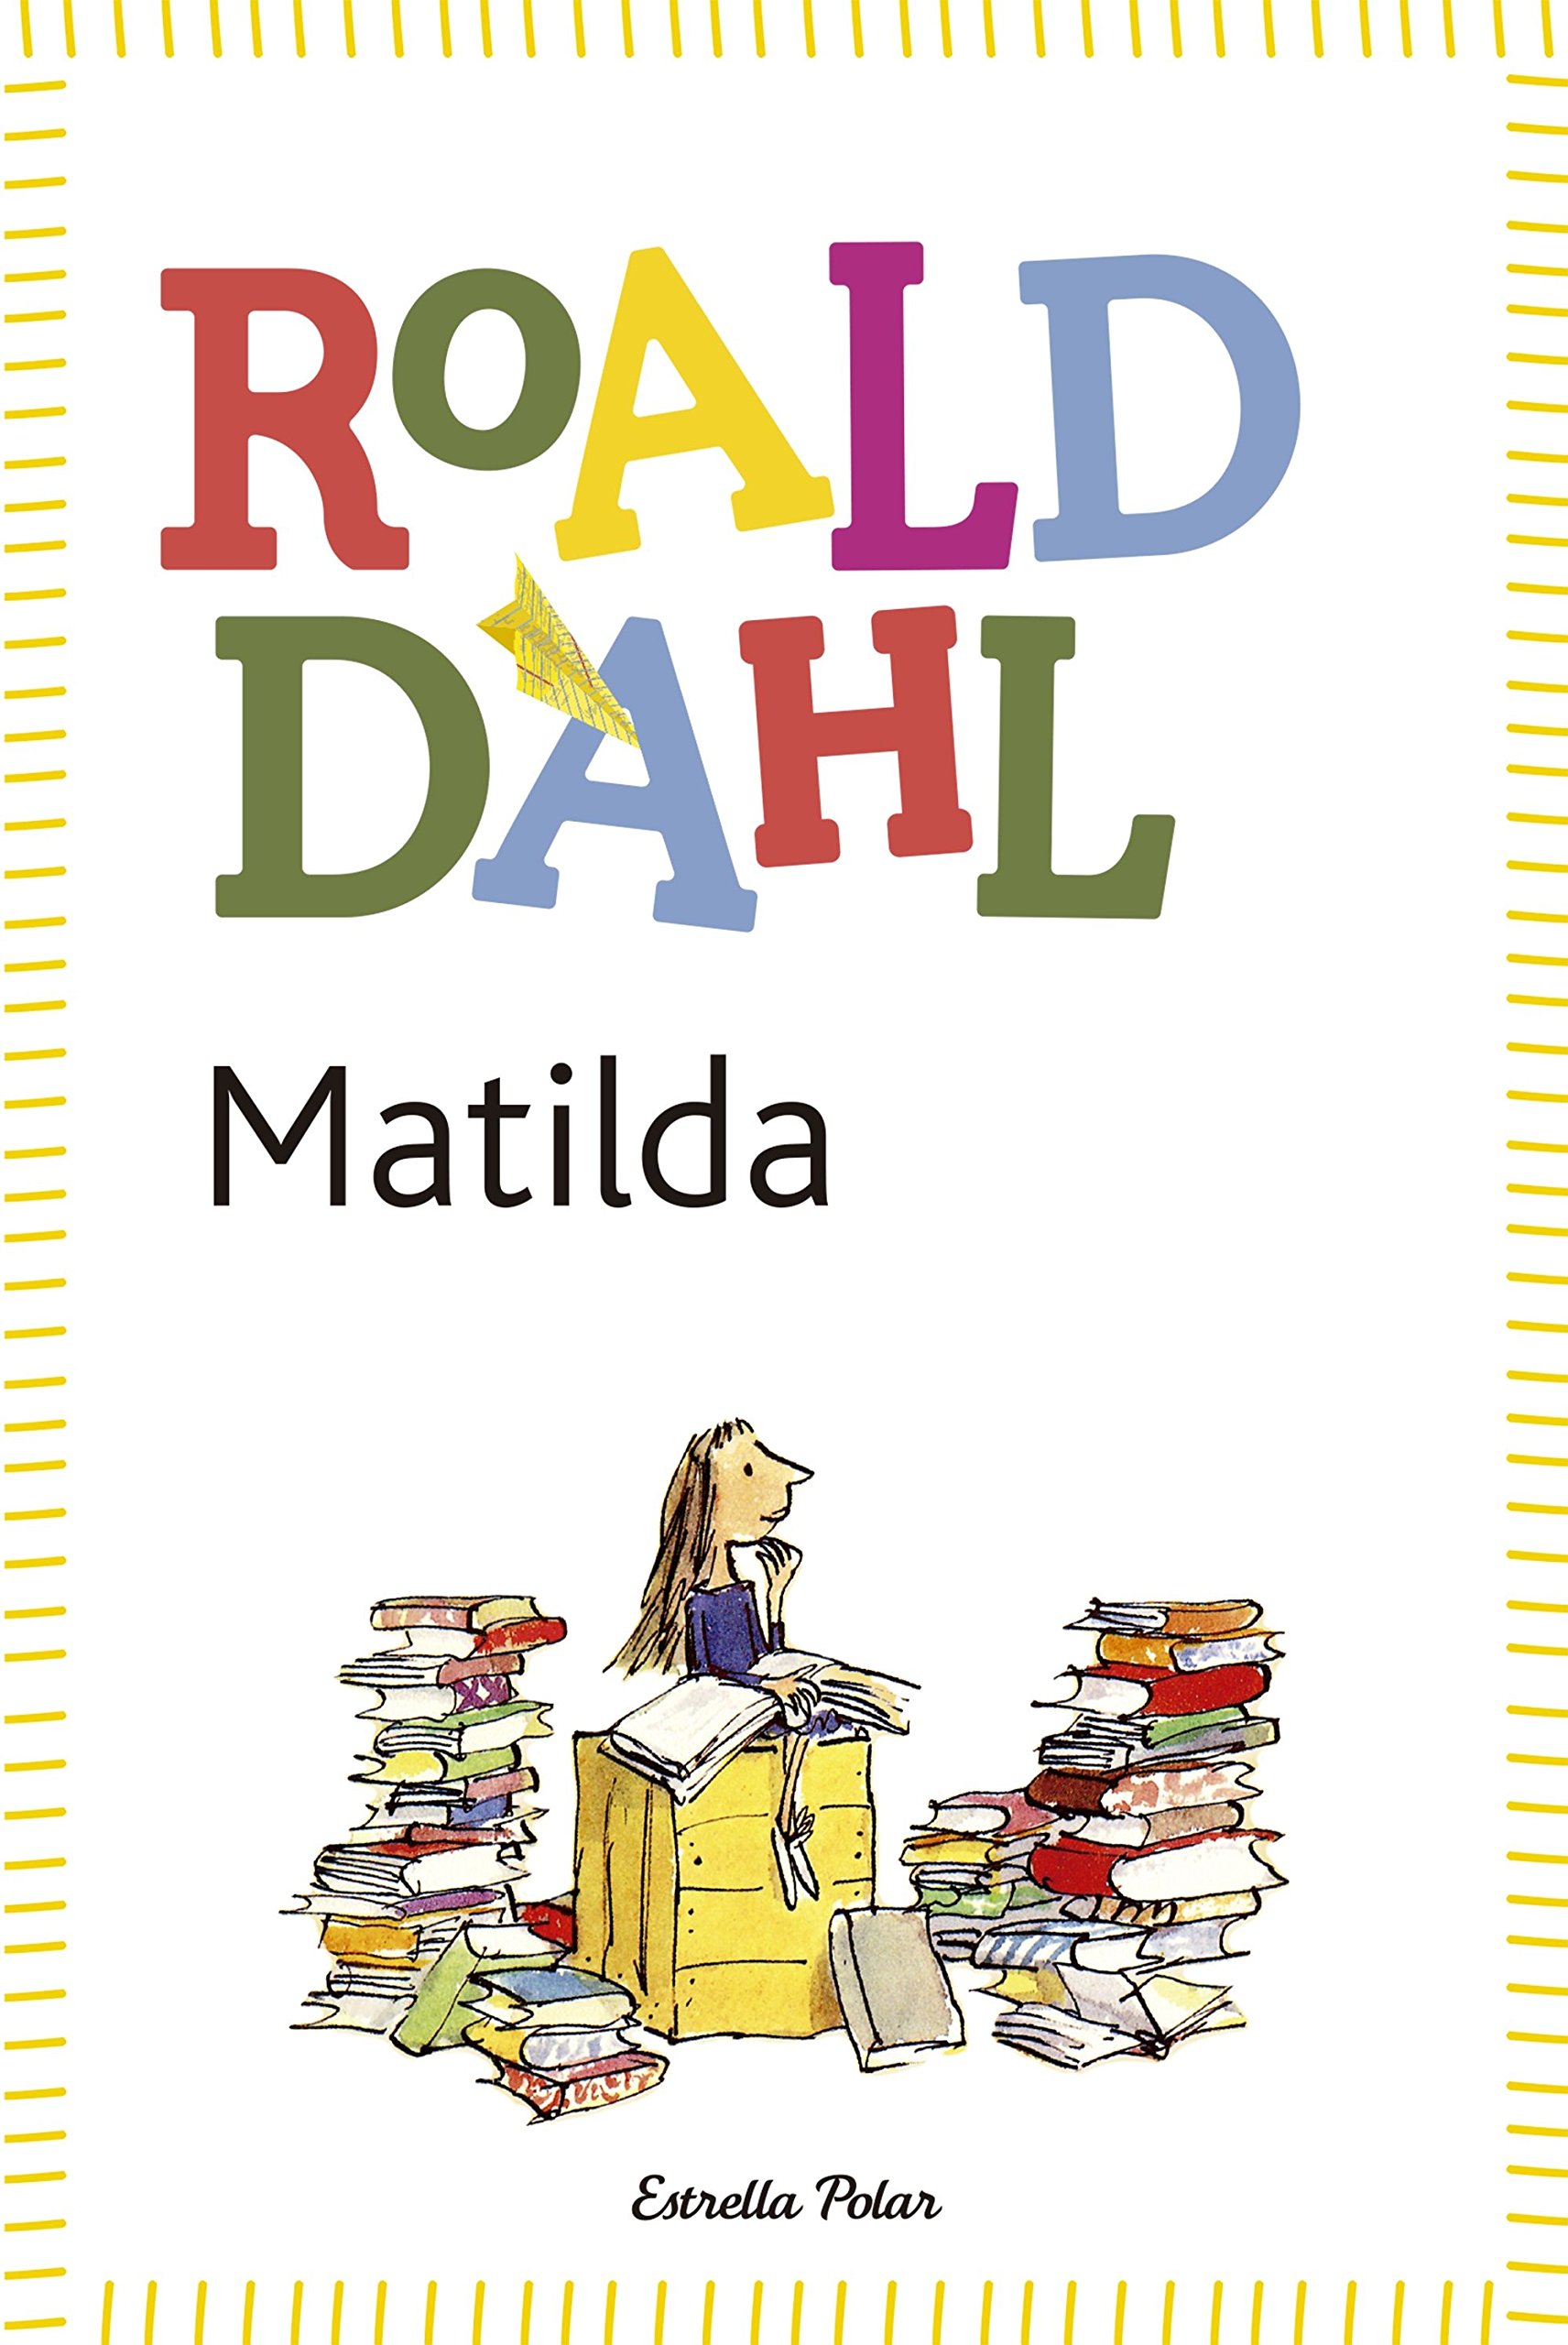 Matilda read. Dahl Roald "Matilda". Matilda by Roald Dahl.